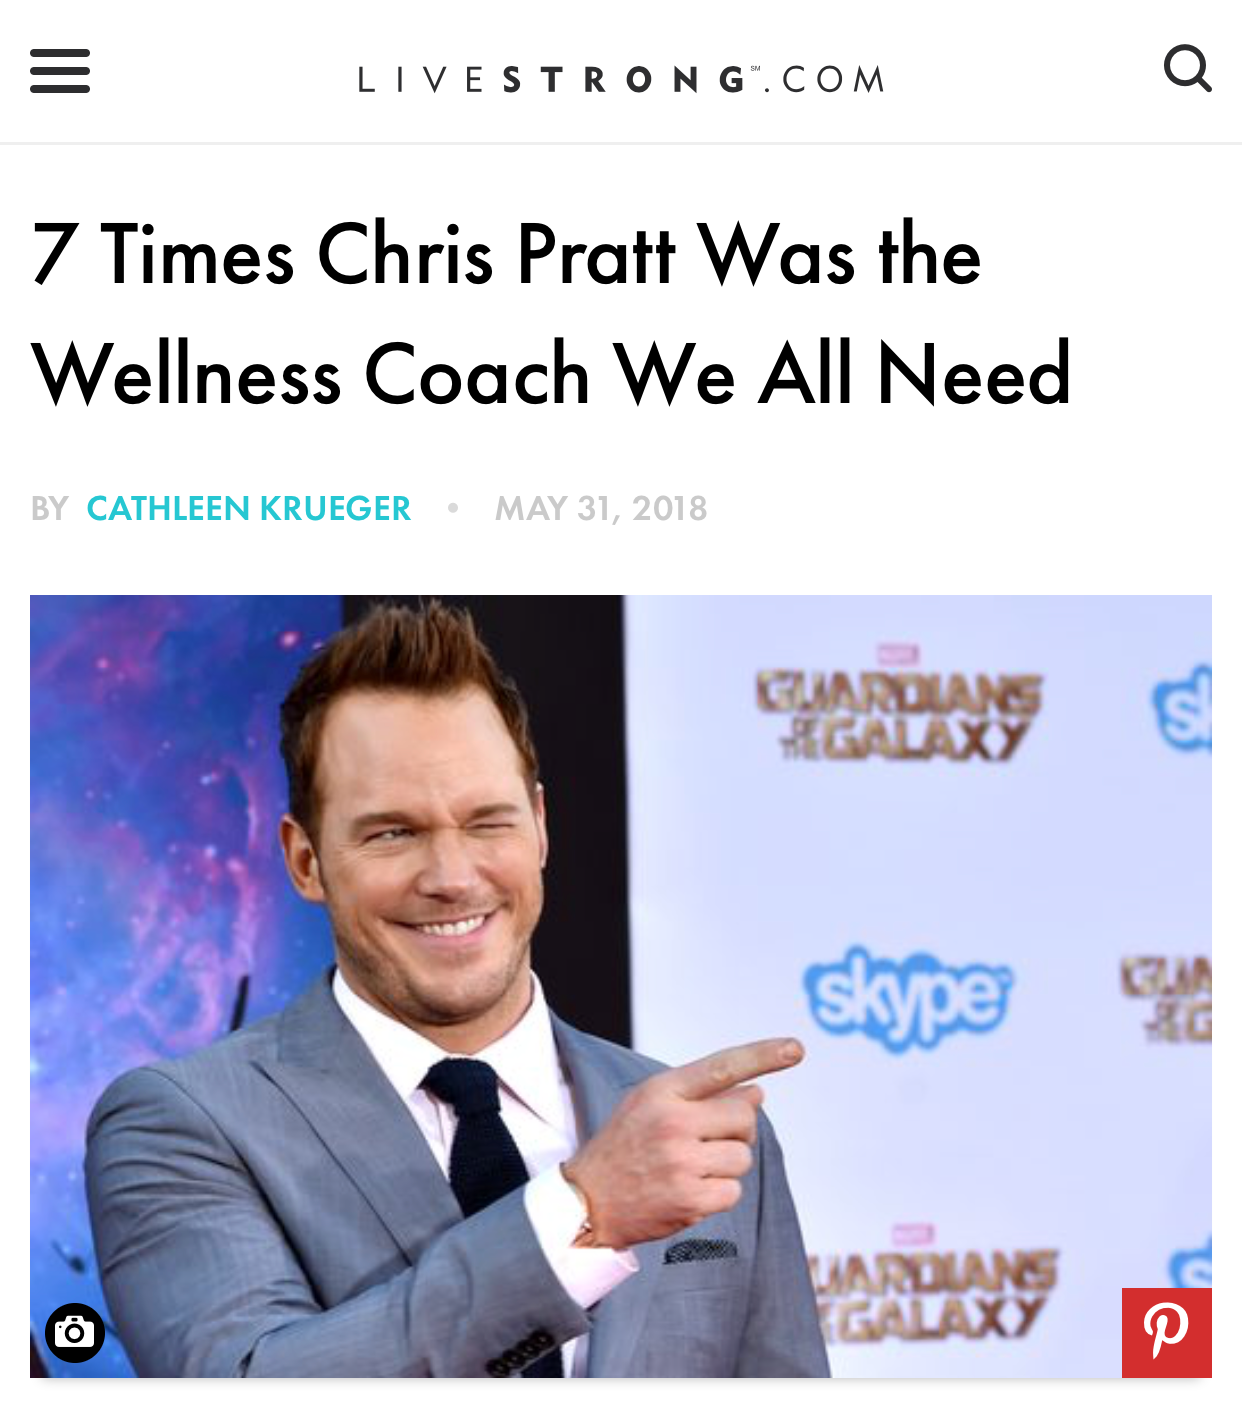 Livestrong.com: "7 Times Chris Pratt Was the Wellness Coach We All Need"